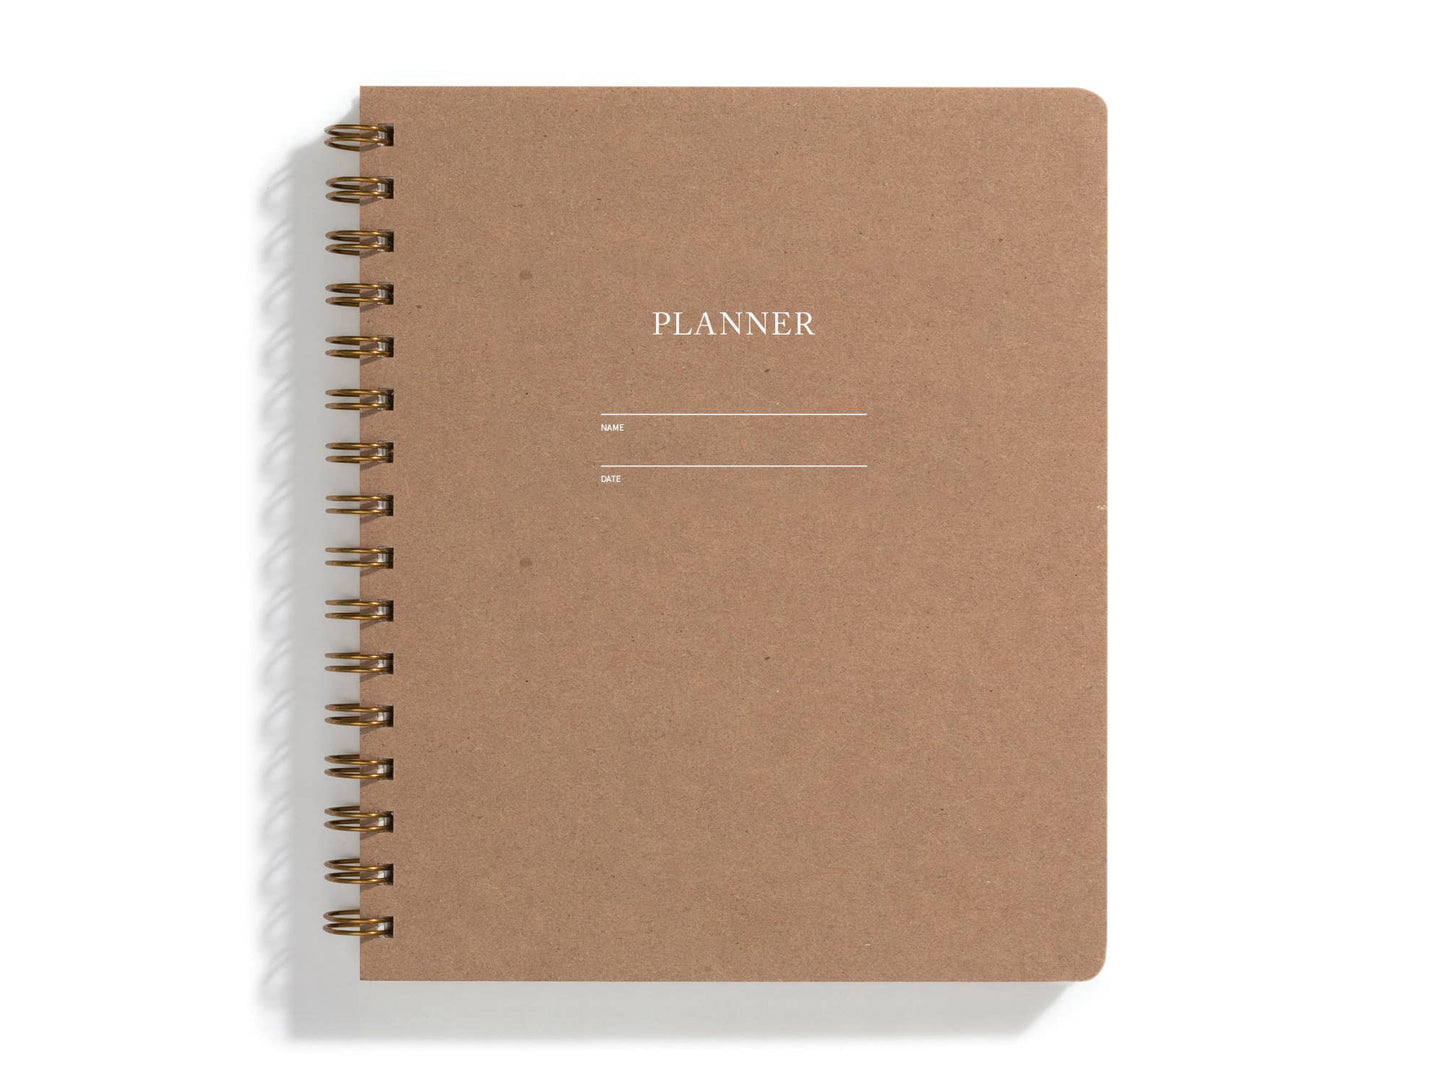 Planner; Kraft By Shorthand Press (Un-Dated)